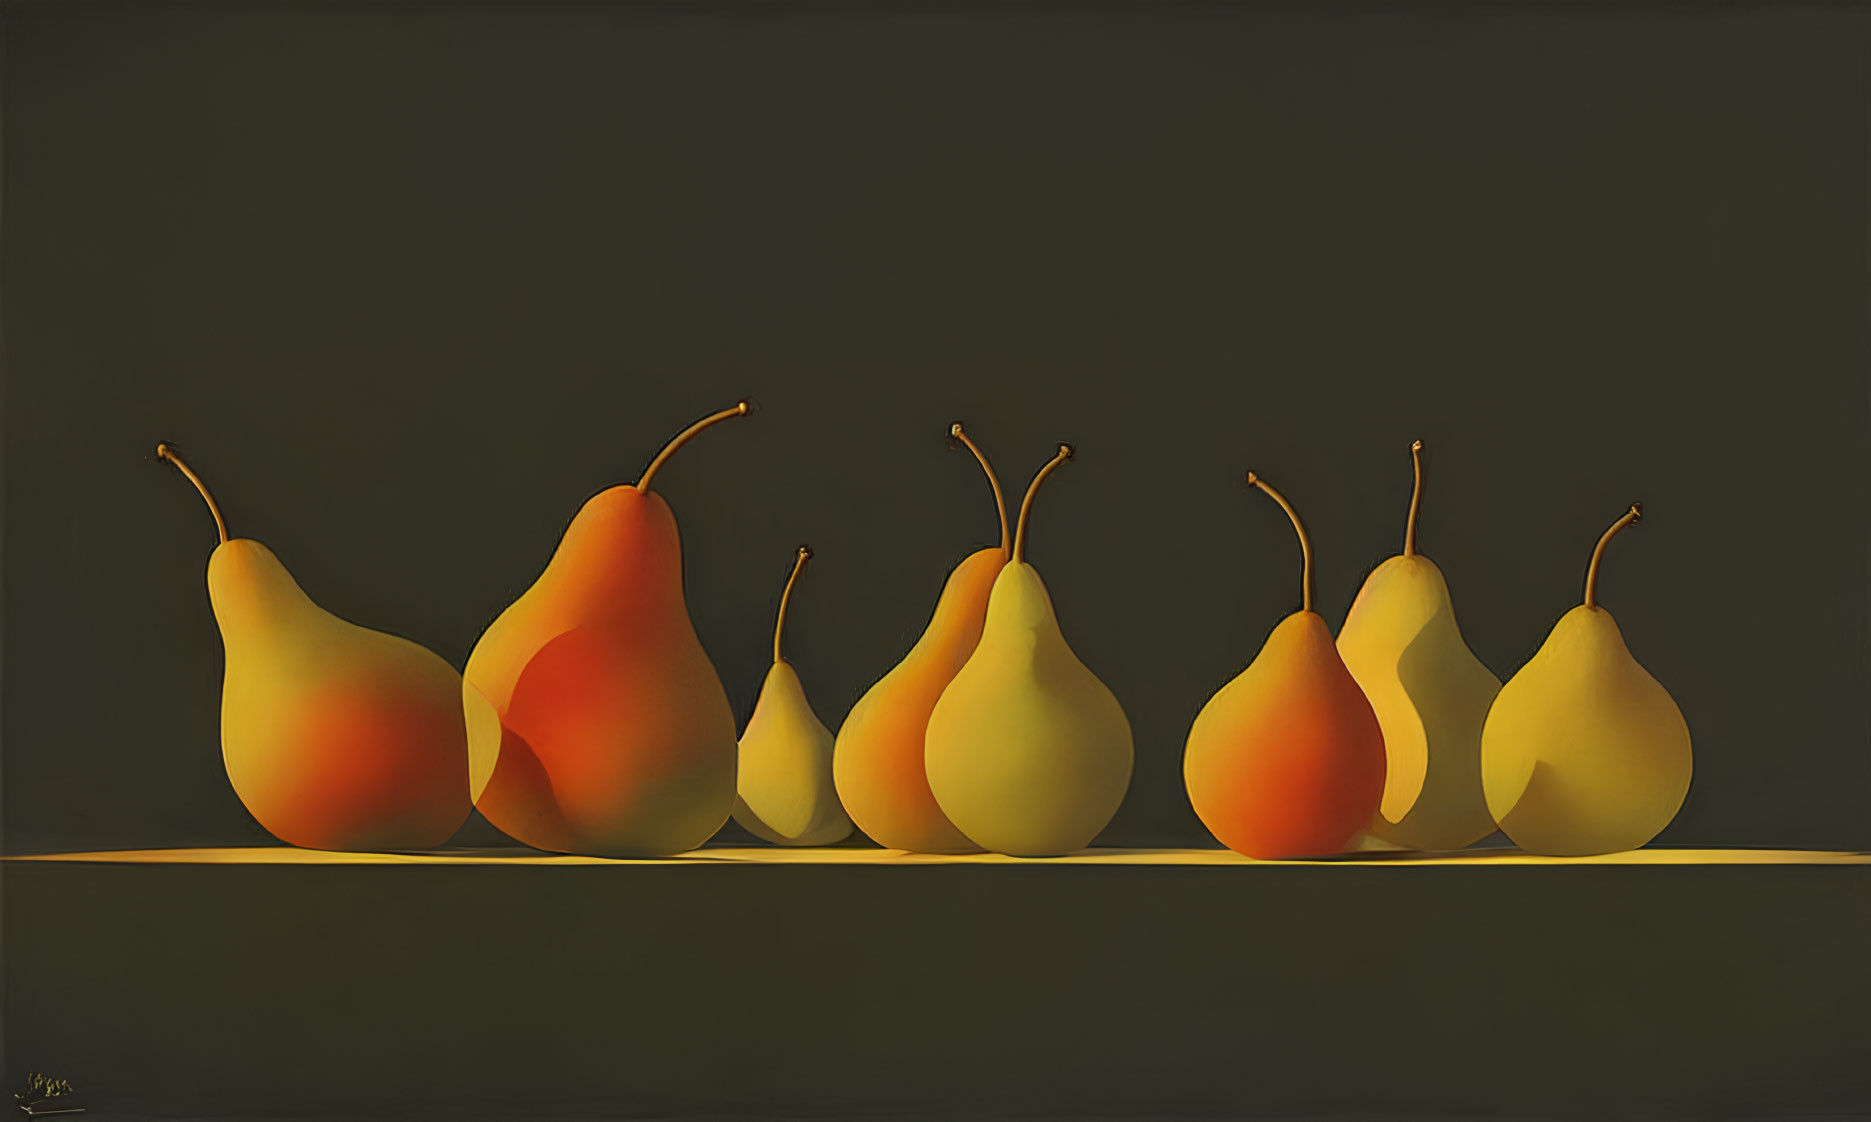 Seven gradient yellow-orange pears on flat surface against dark background